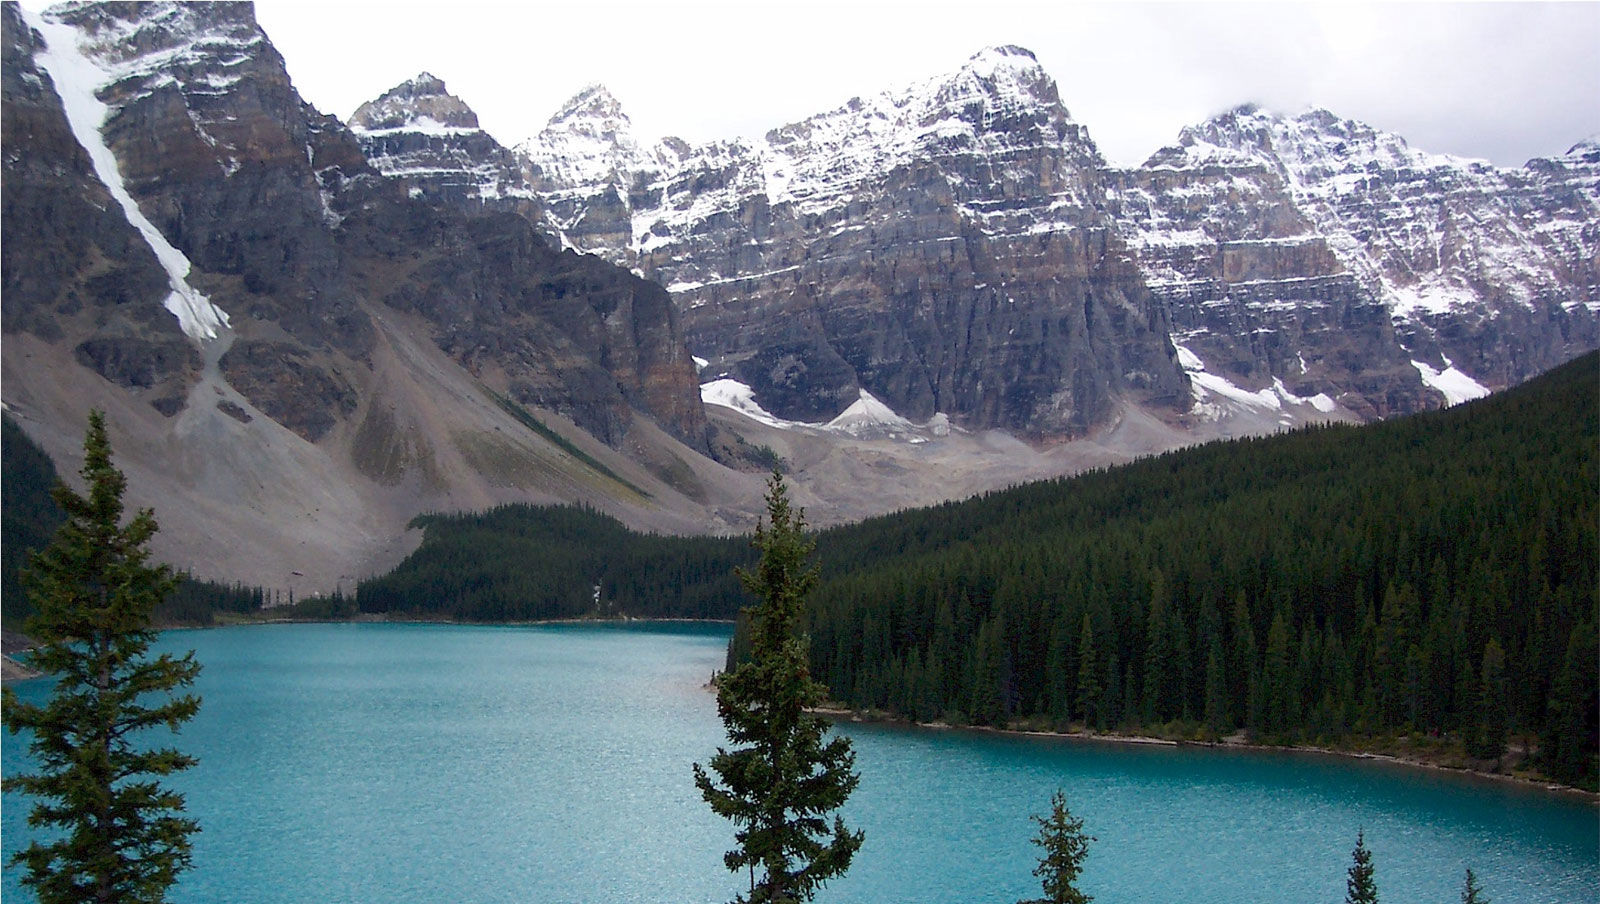 Canada landscape